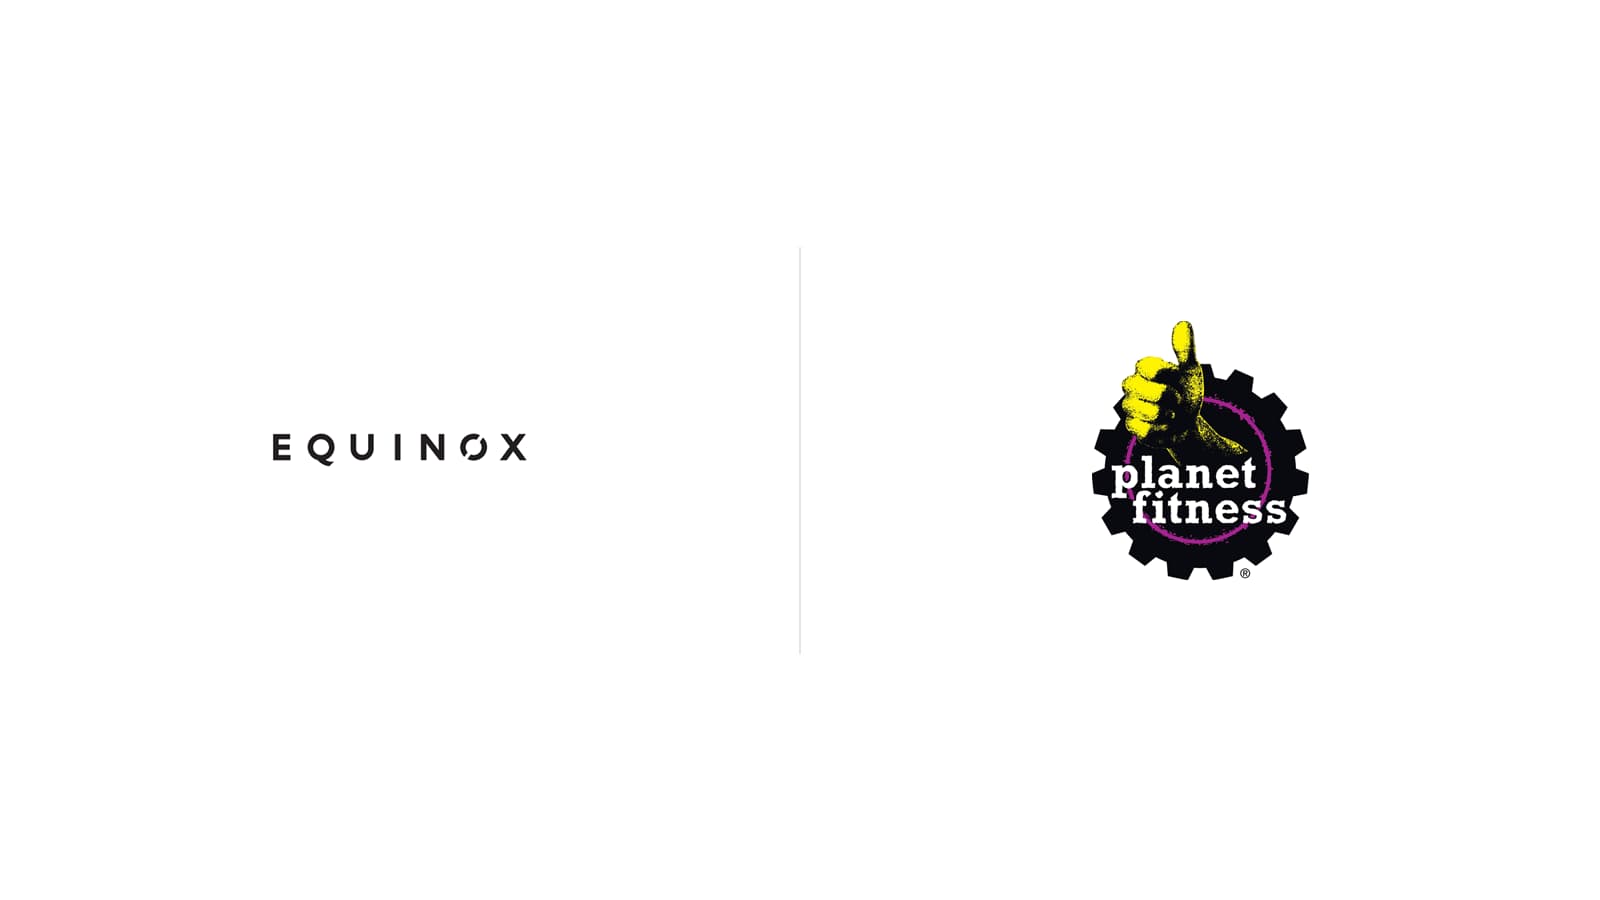 Equinox logo juxtaposed to Planet Fitness logo